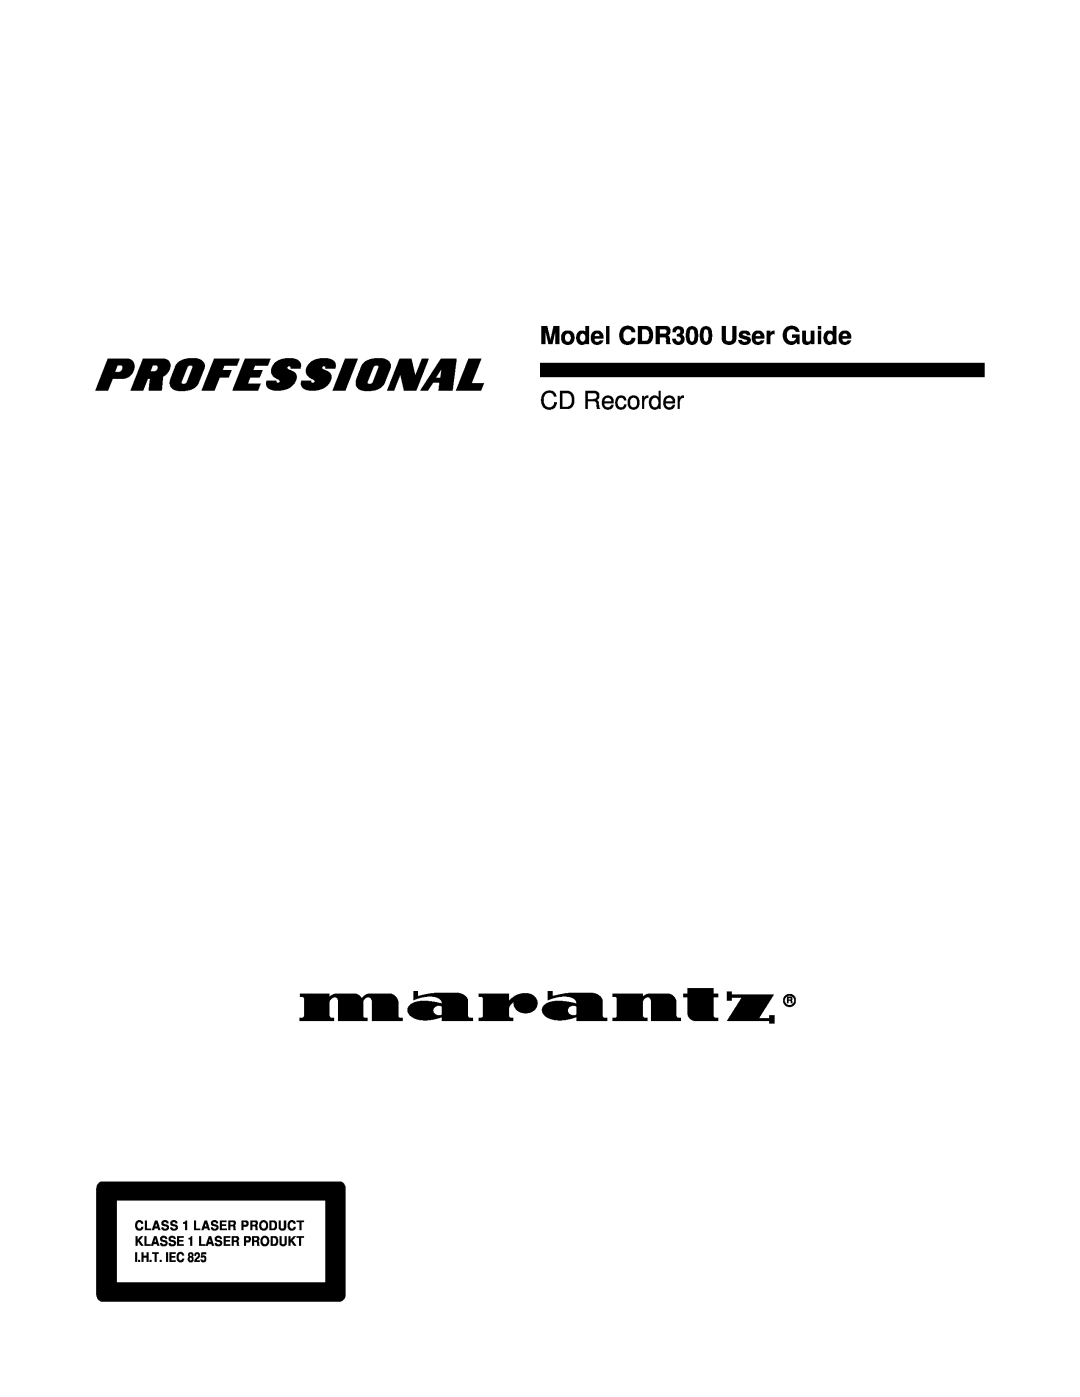 Marantz manual Model CDR300 User Guide, CD Recorder 